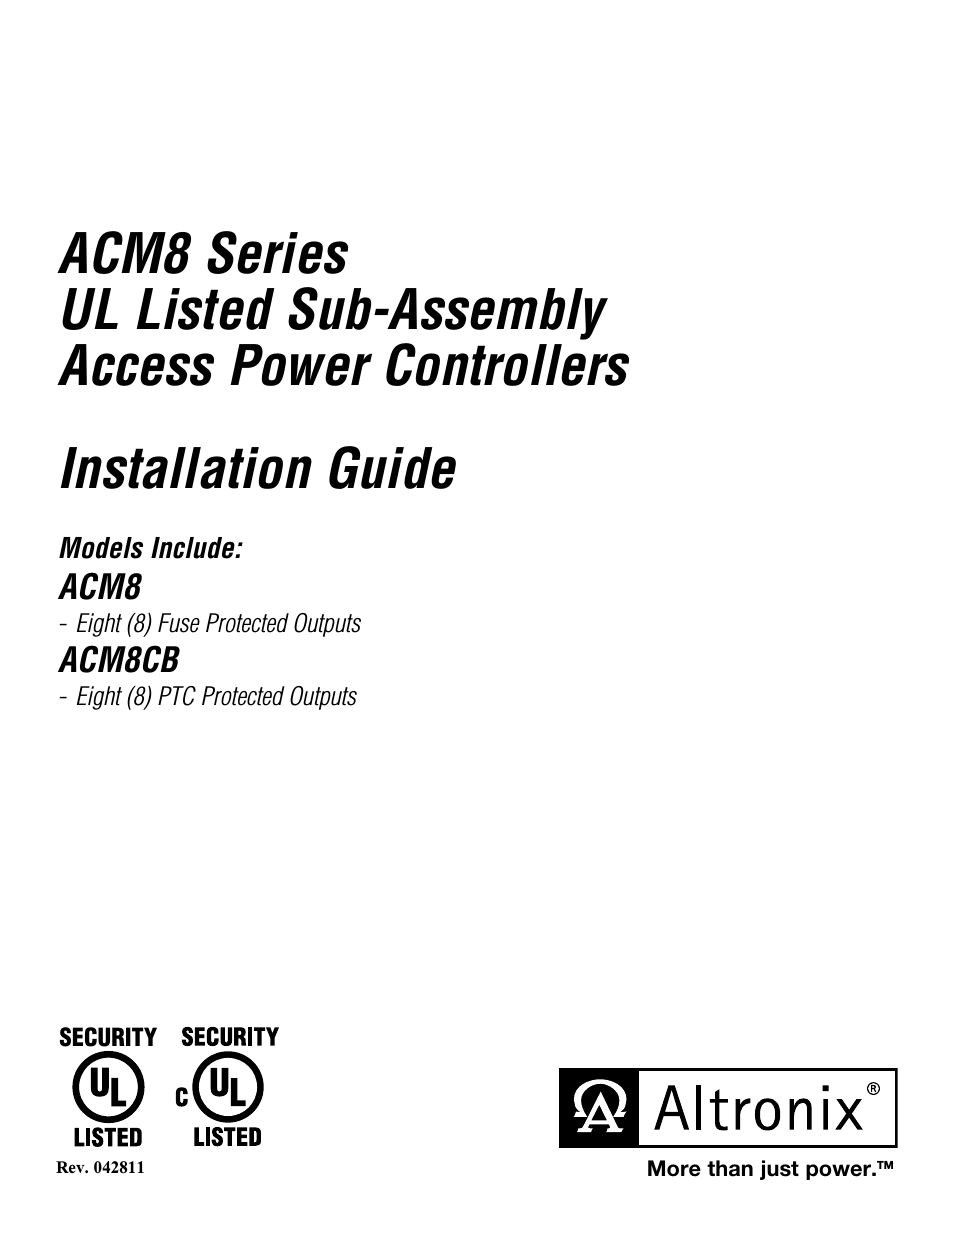 ACM8CB Installation Instructions